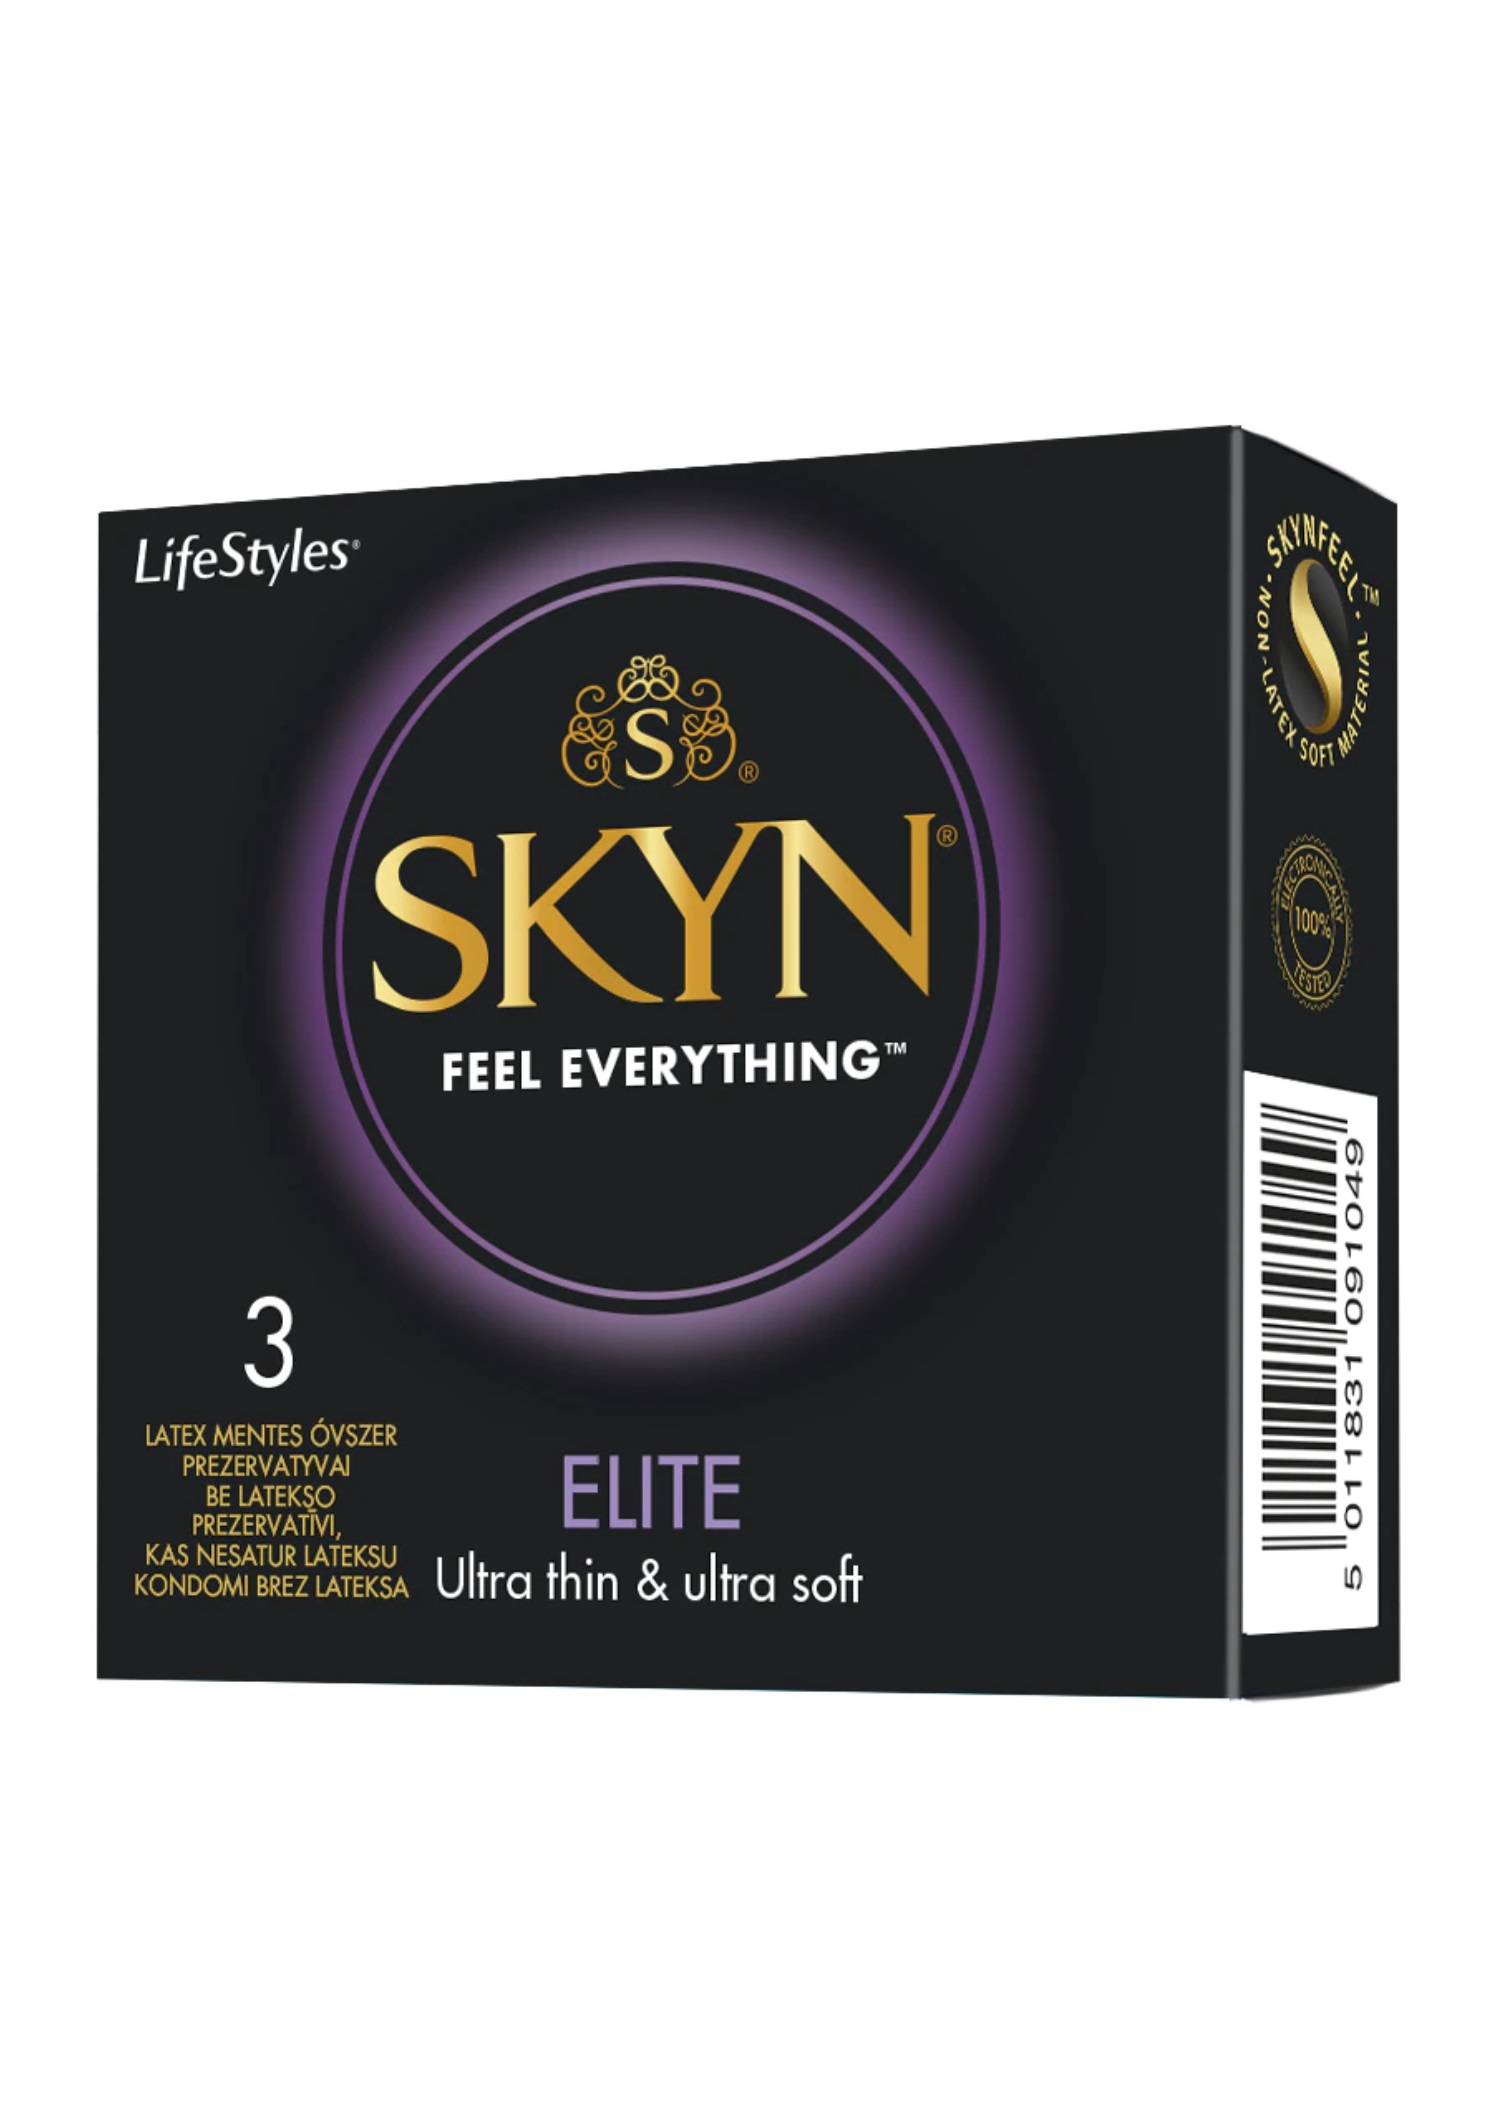 Lifestyle Skyn-elite,latexmentes condom.